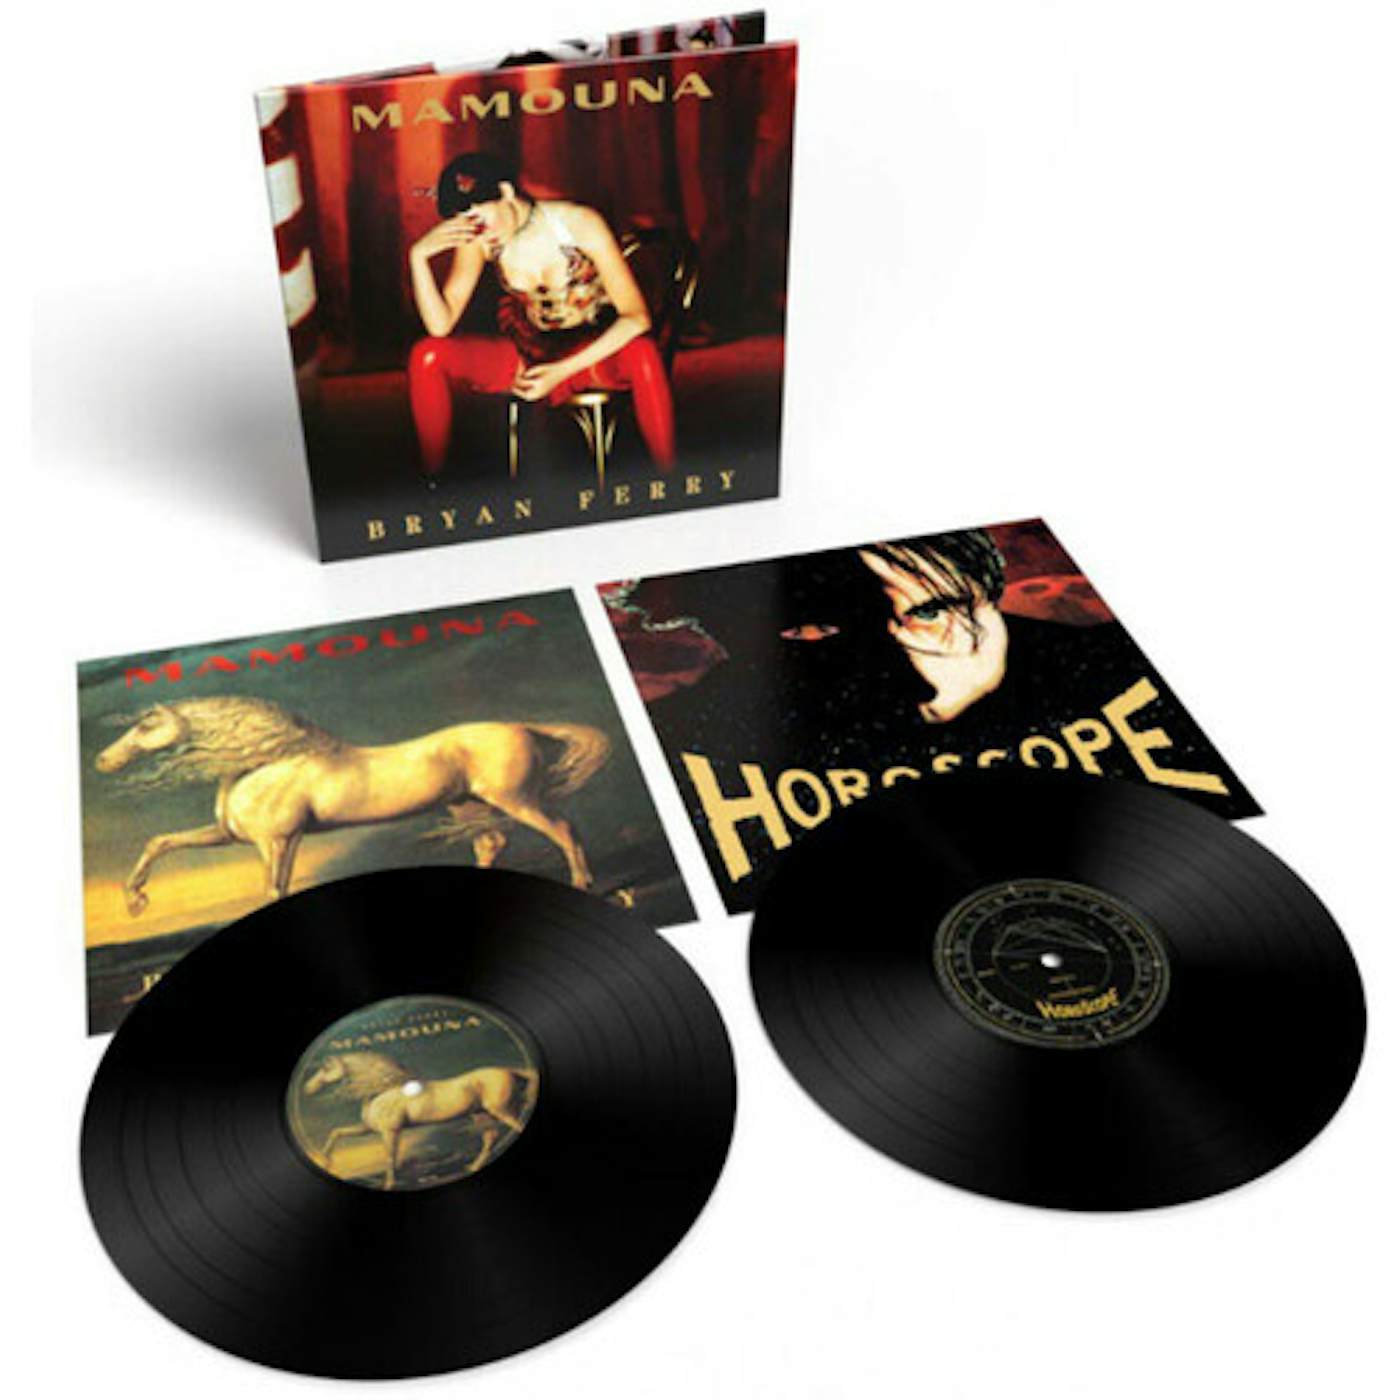 Bryan Ferry Mamouna (2LP) Vinyl Record